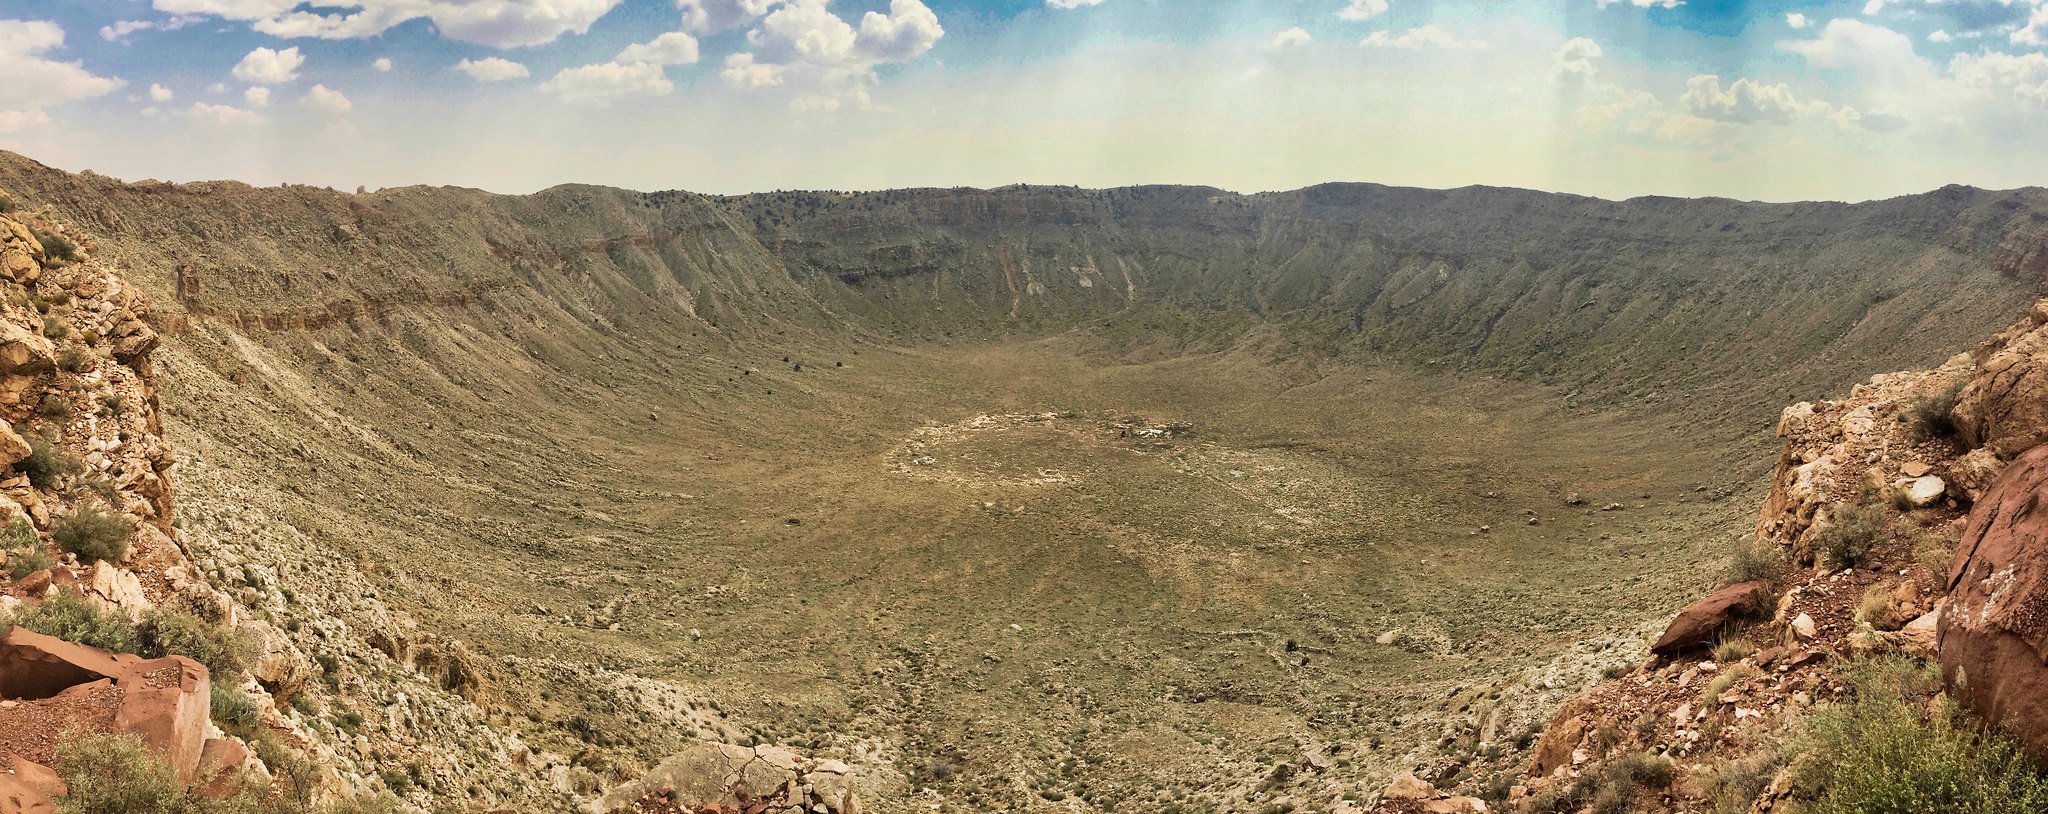 Barringer Crater in Arizona.